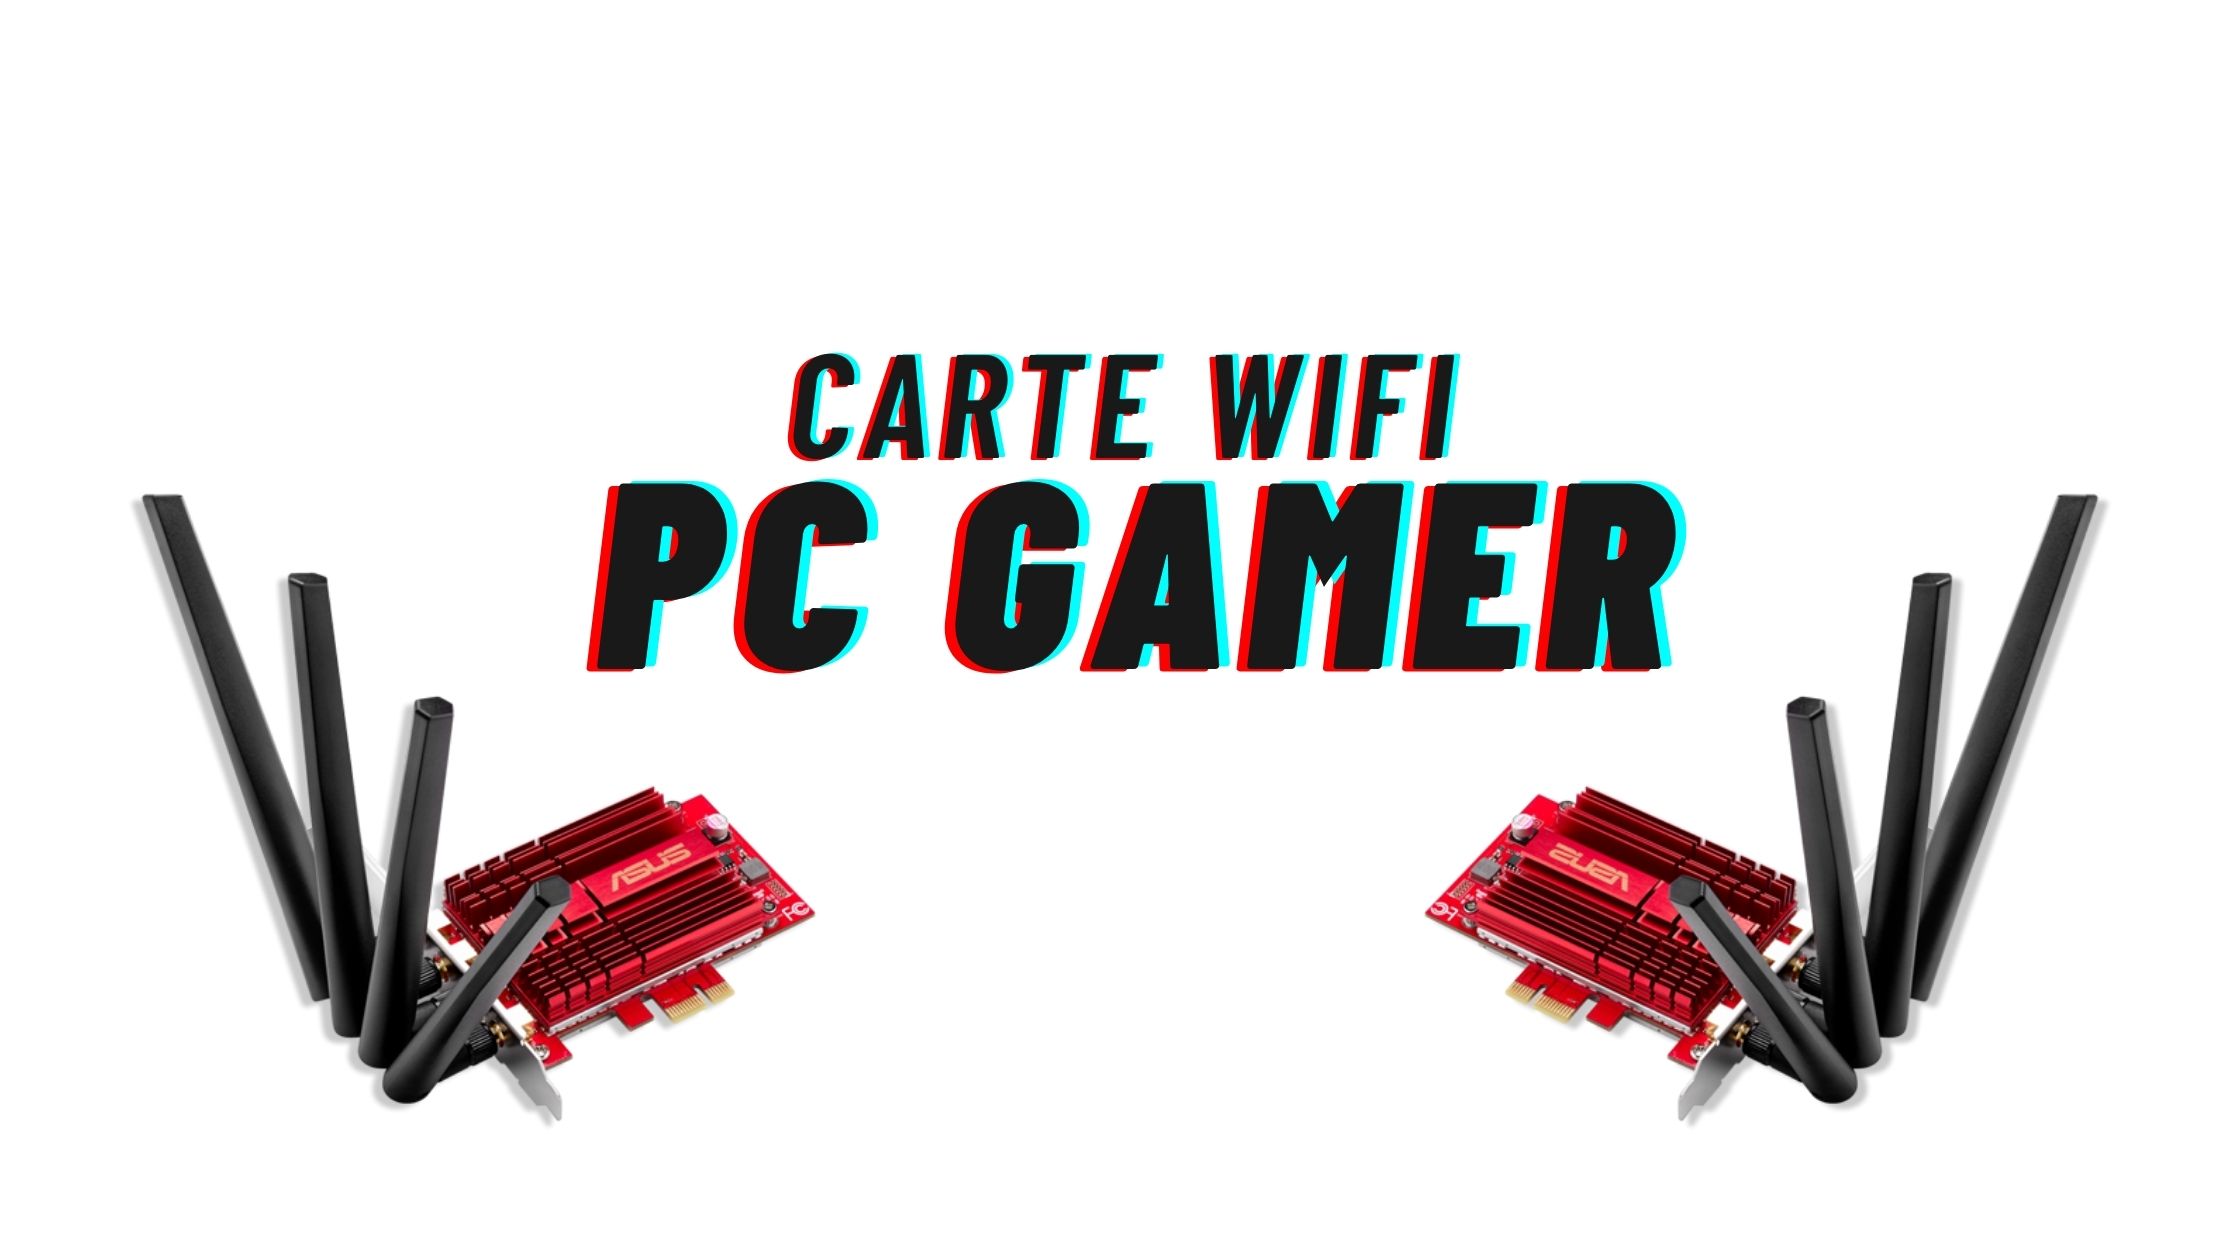 Quelle Carte Wifi Choisir pour un PC Gamer ? - Gazette du geek